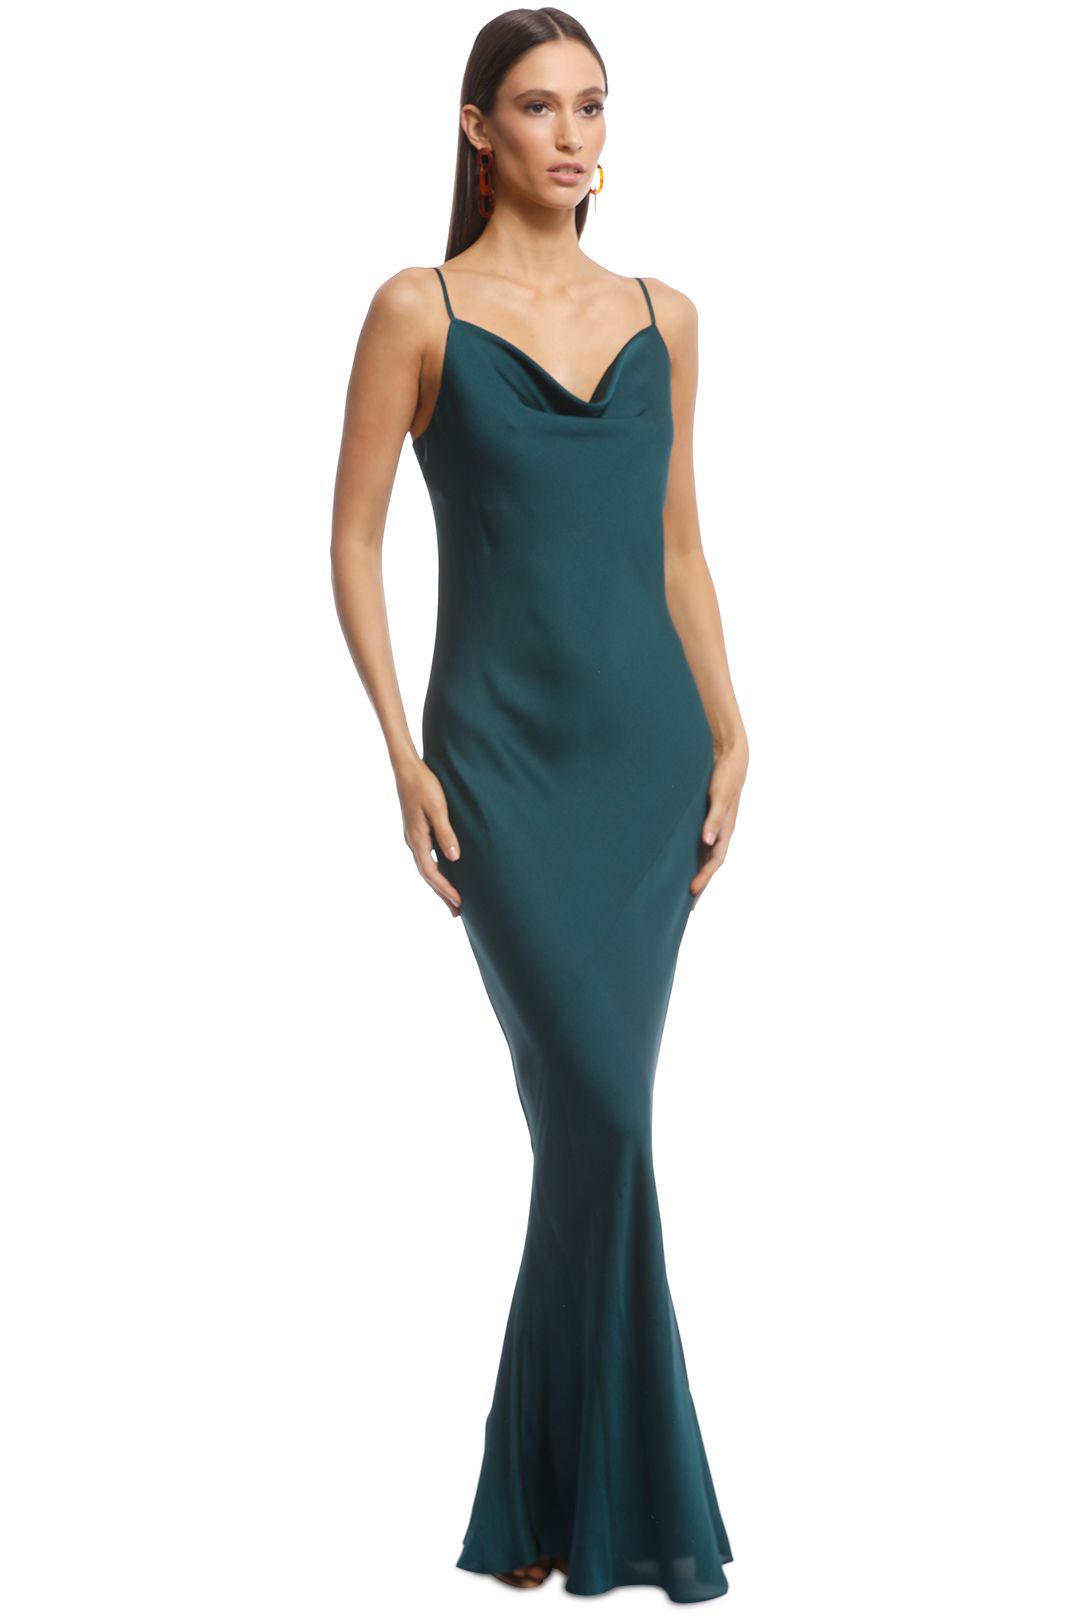 Shona Joy - Luxe Bias Cowl Slip Dress - Emerald - Side